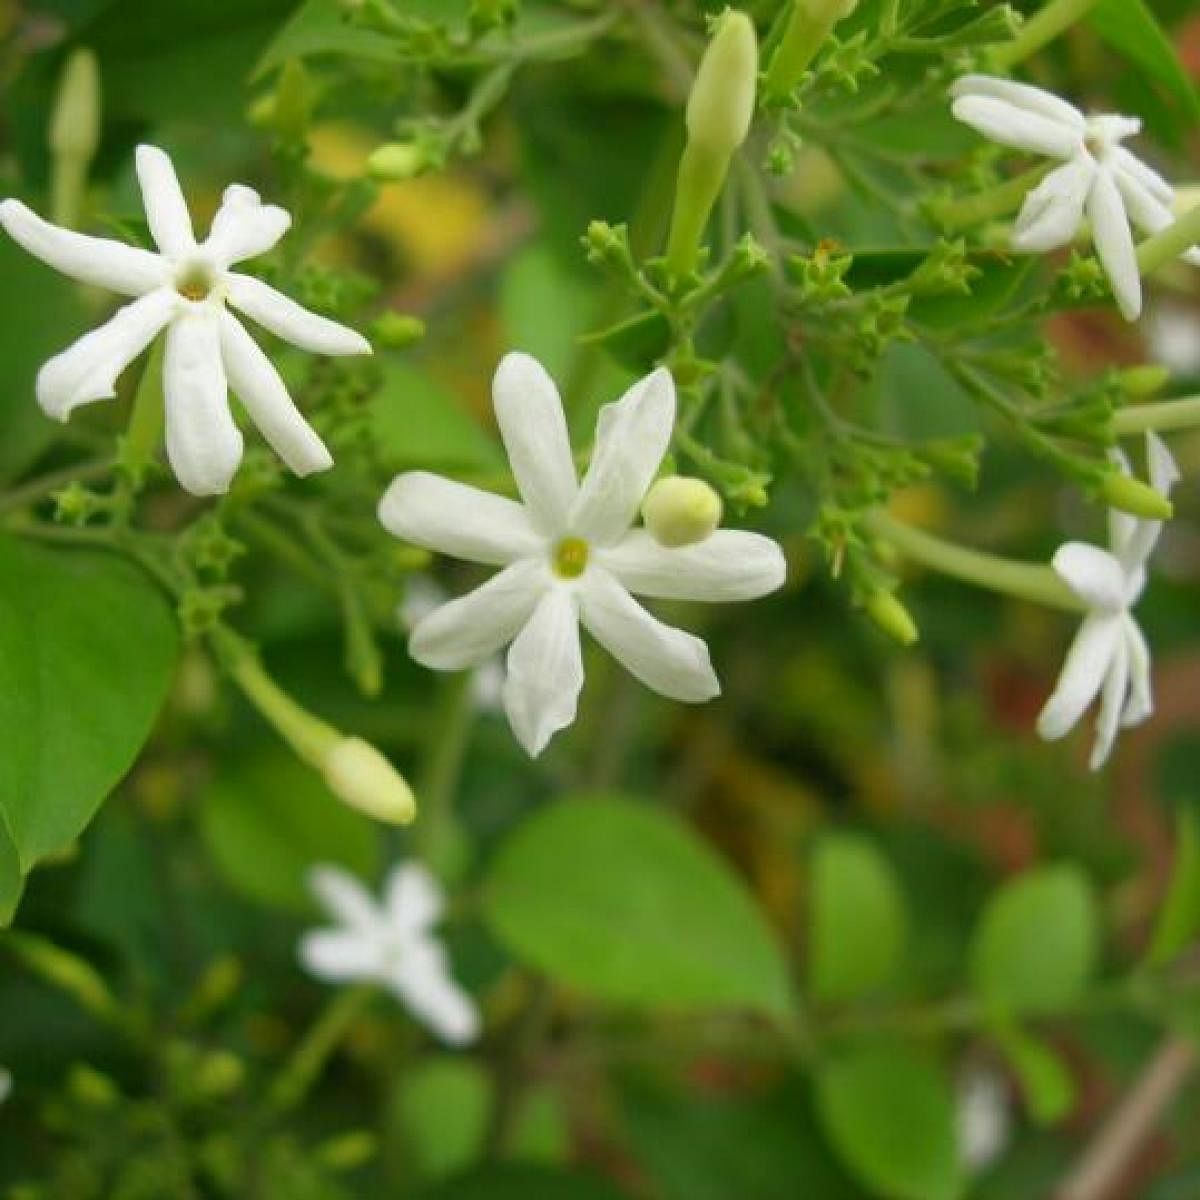 A flowering Mysore mallige plant. DH Photo